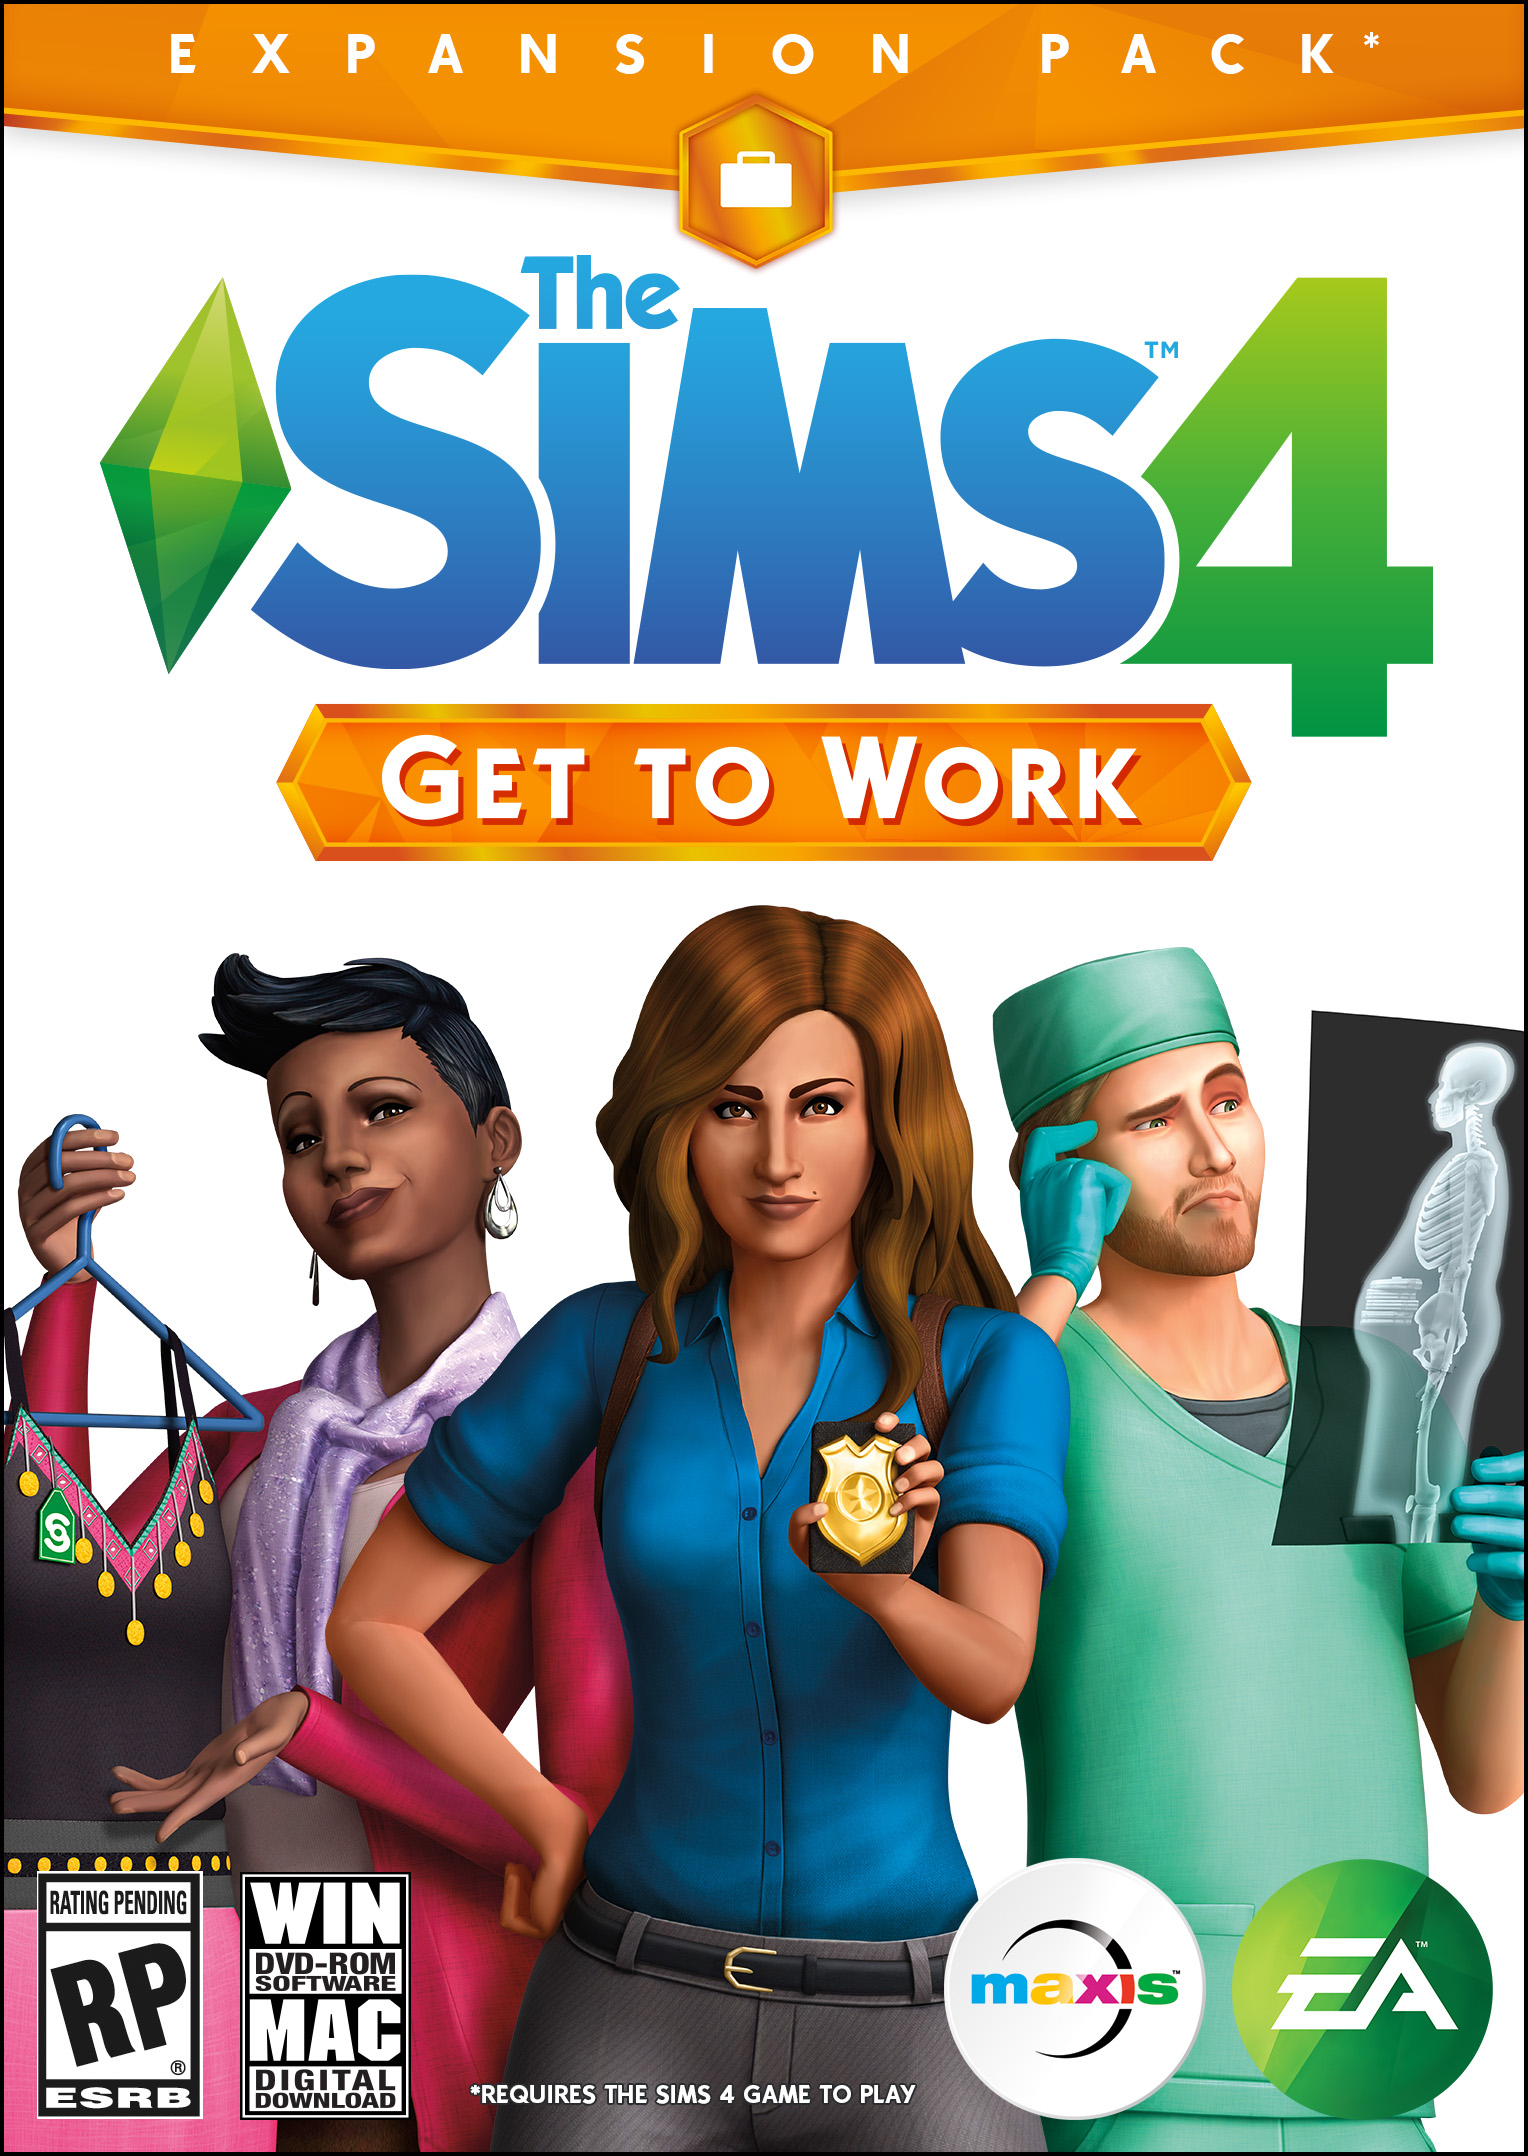 Sims 4 Mac free. download full Version